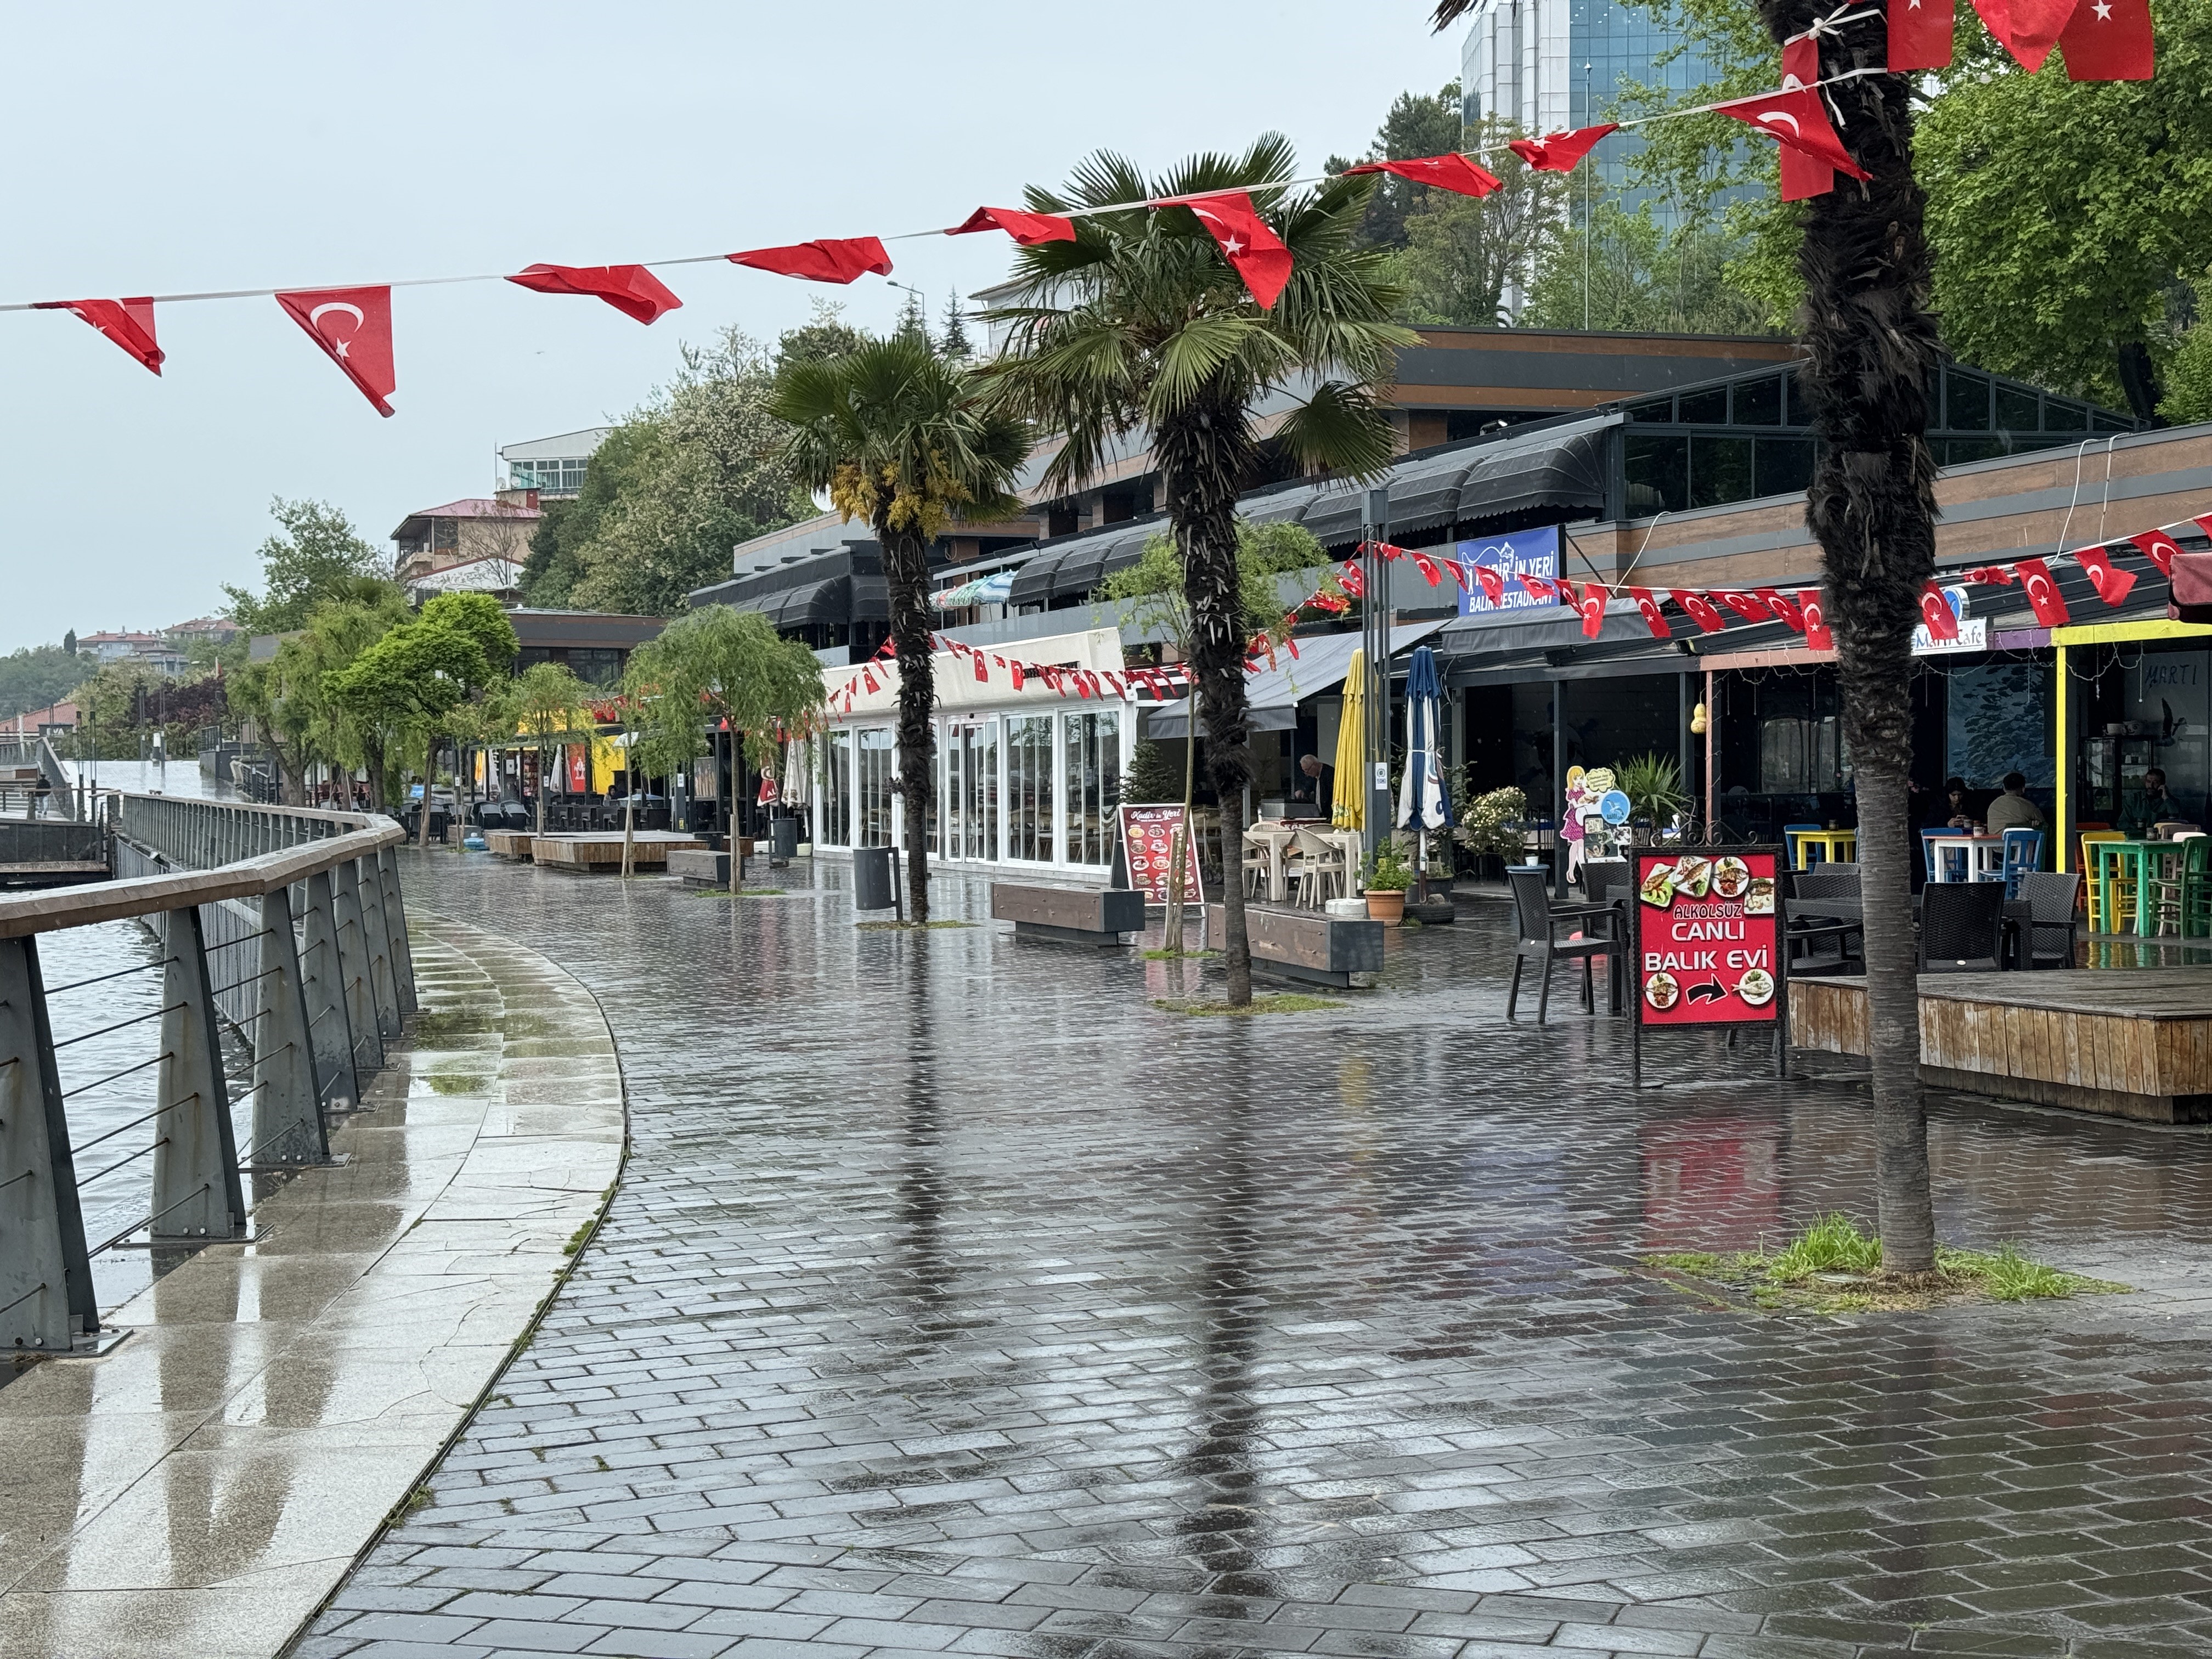 Zonguldak'ta yağış etkili oldu